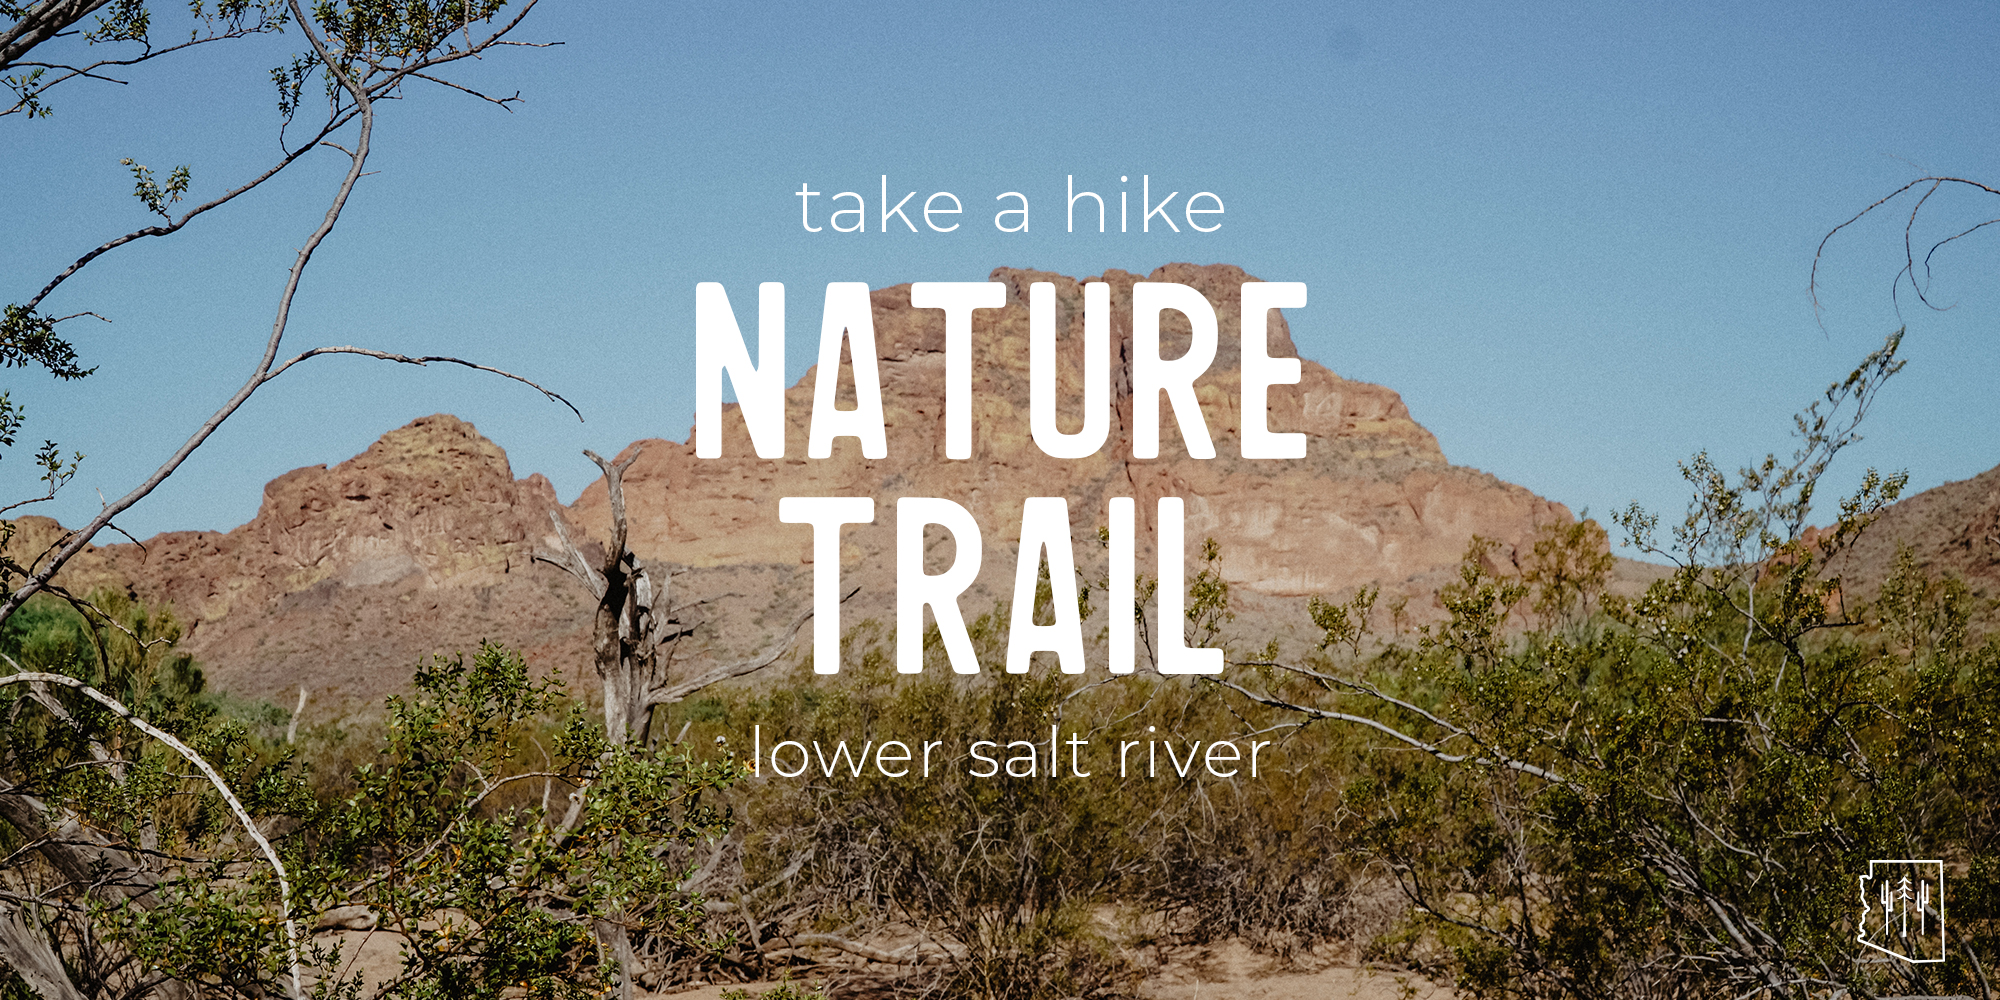 Hike Lower Salt River Nature Trail Salt River Arizona Hikers Guide